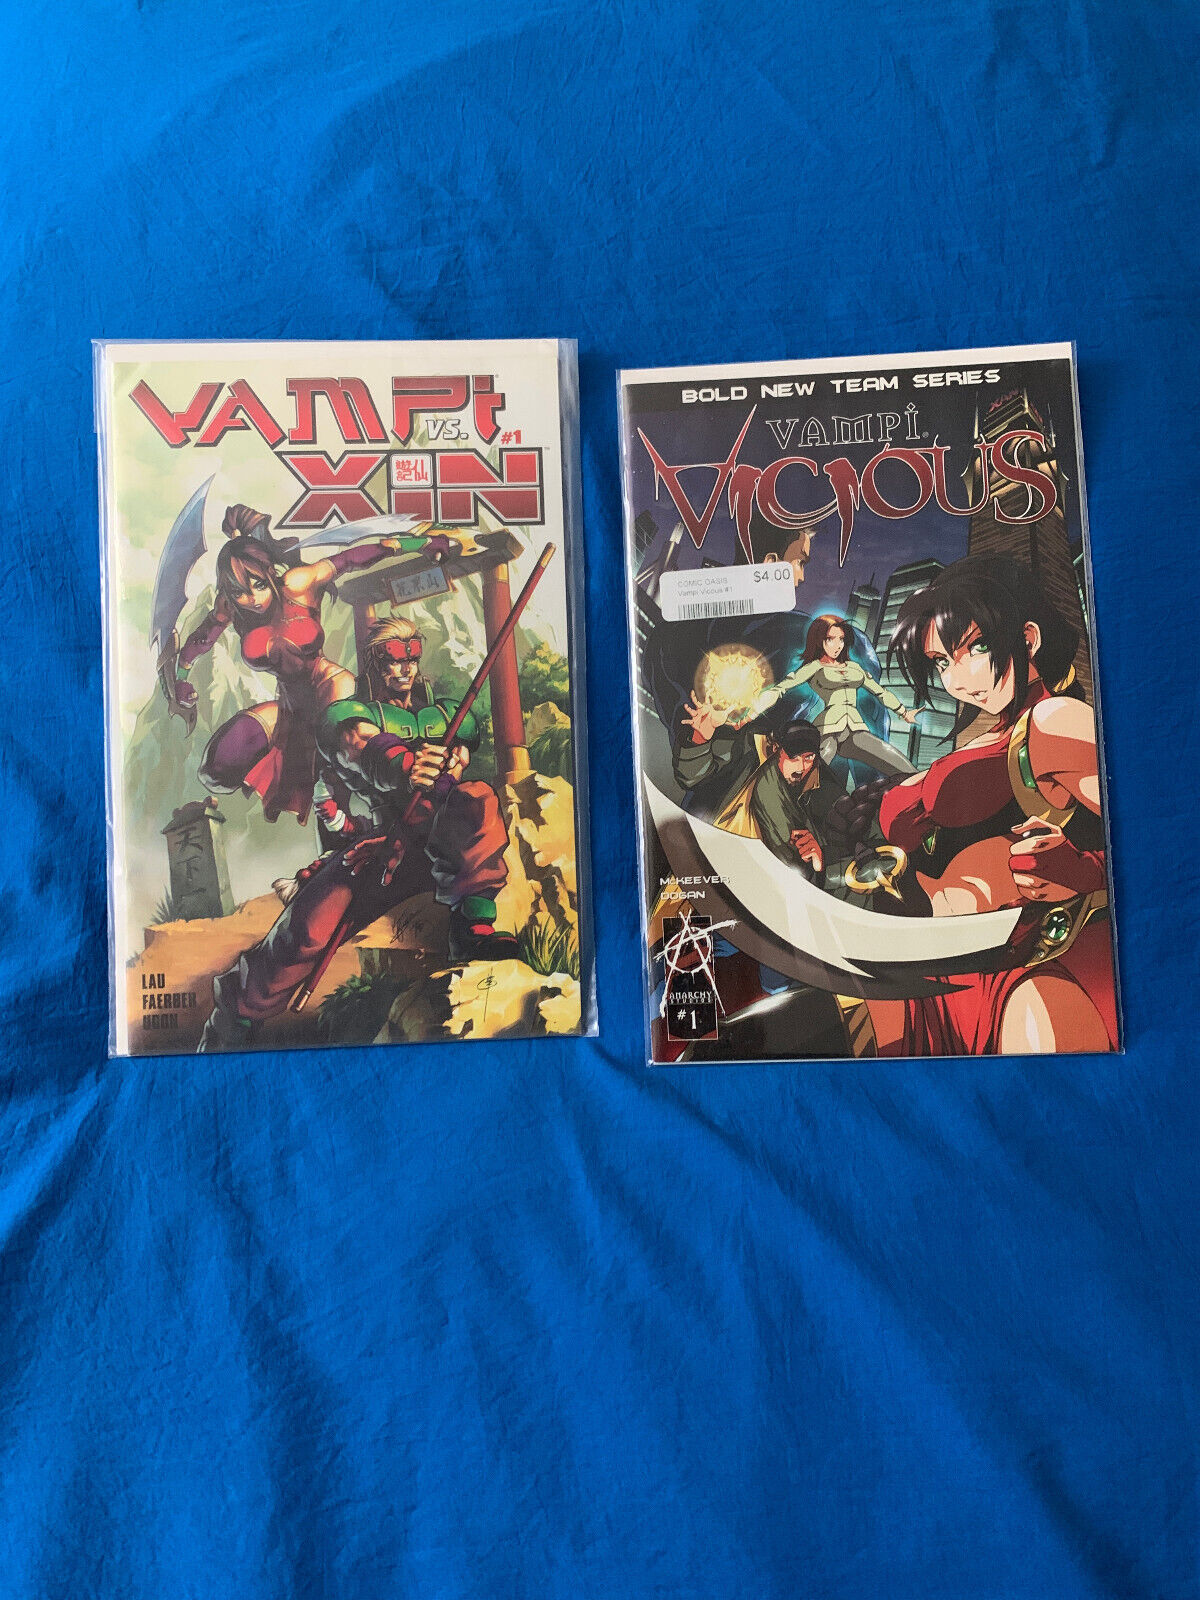 VAMPI VS. XIN #1 -and Vampi Vicious #1 / Anarchy Studios